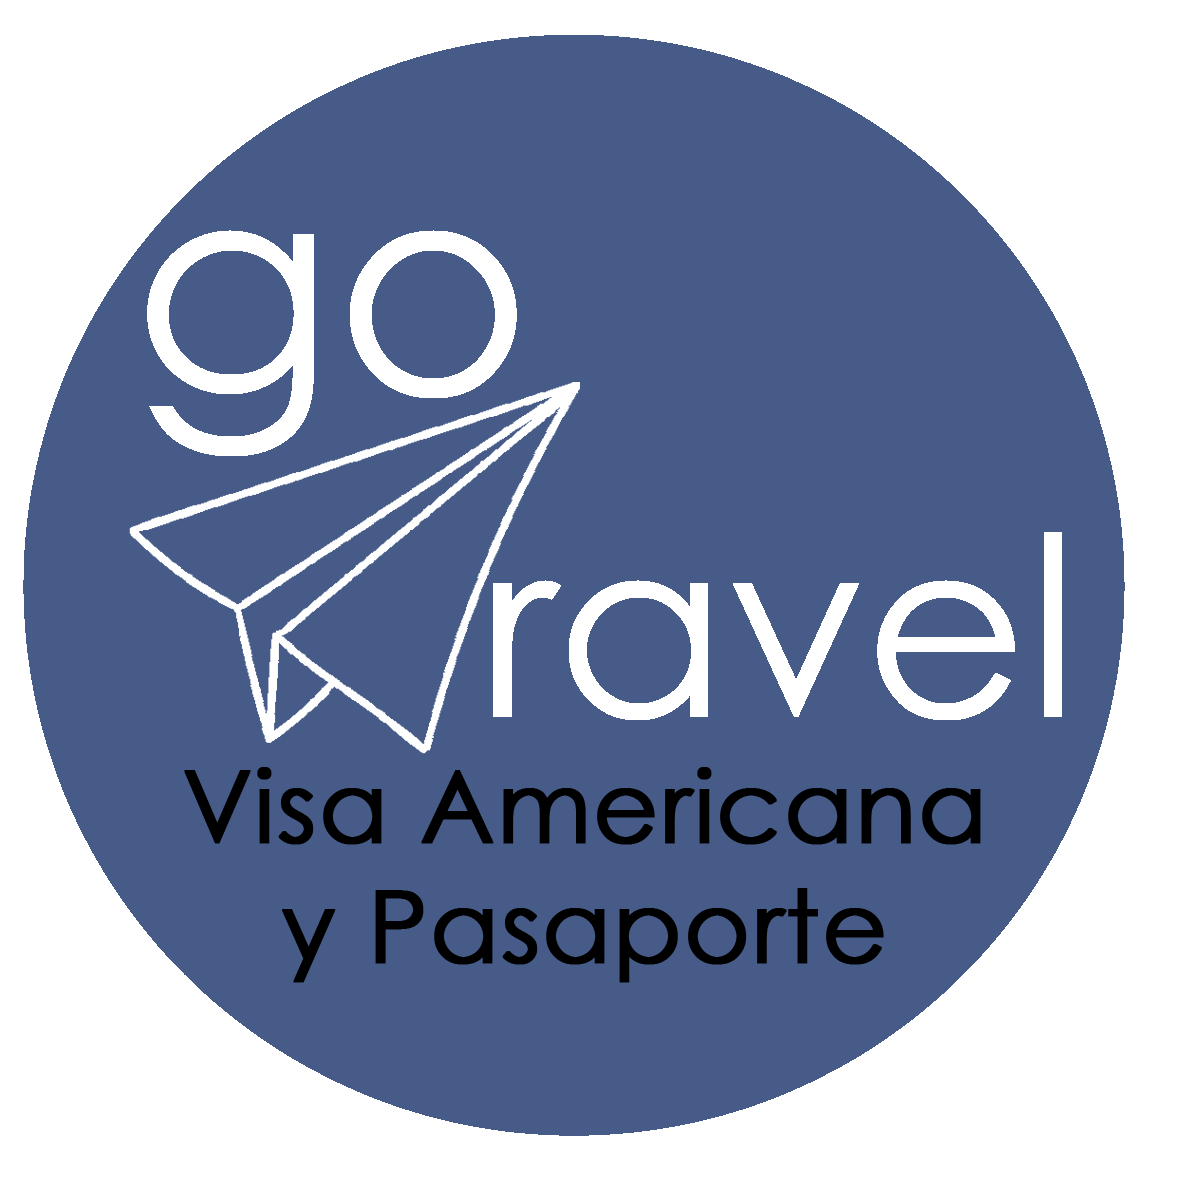 Go Travel Visa